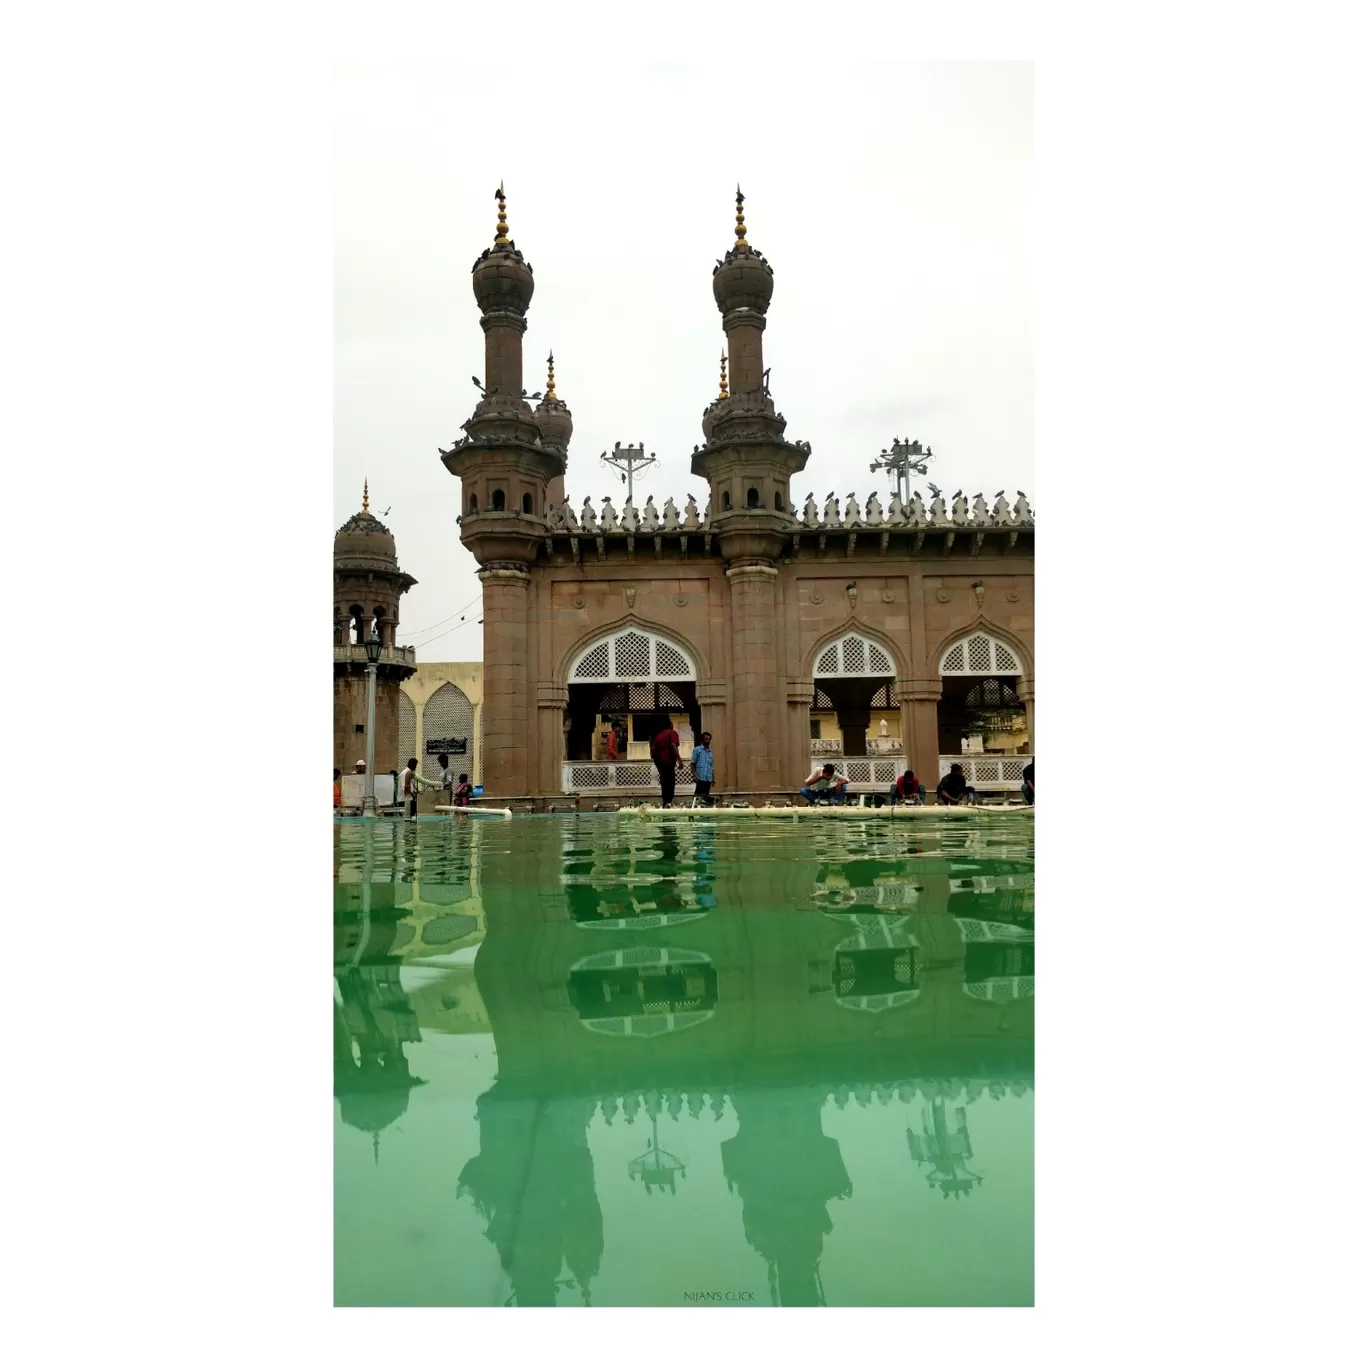 Photo of Jama Masjid By Nijan